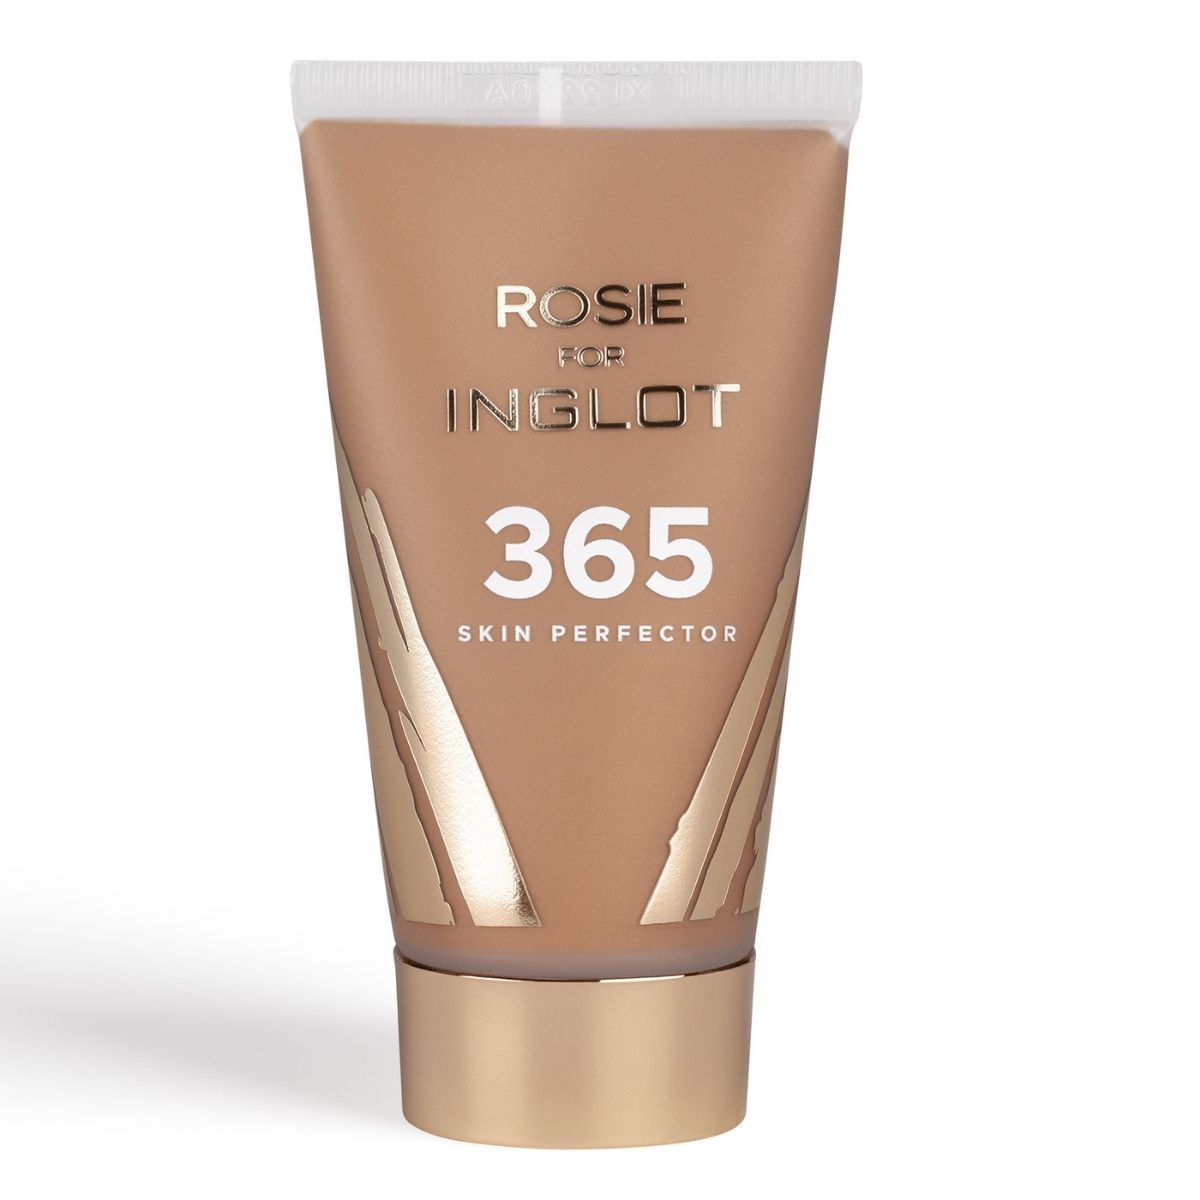 Inglot Rosie 365 Skin Perfector. 20% off